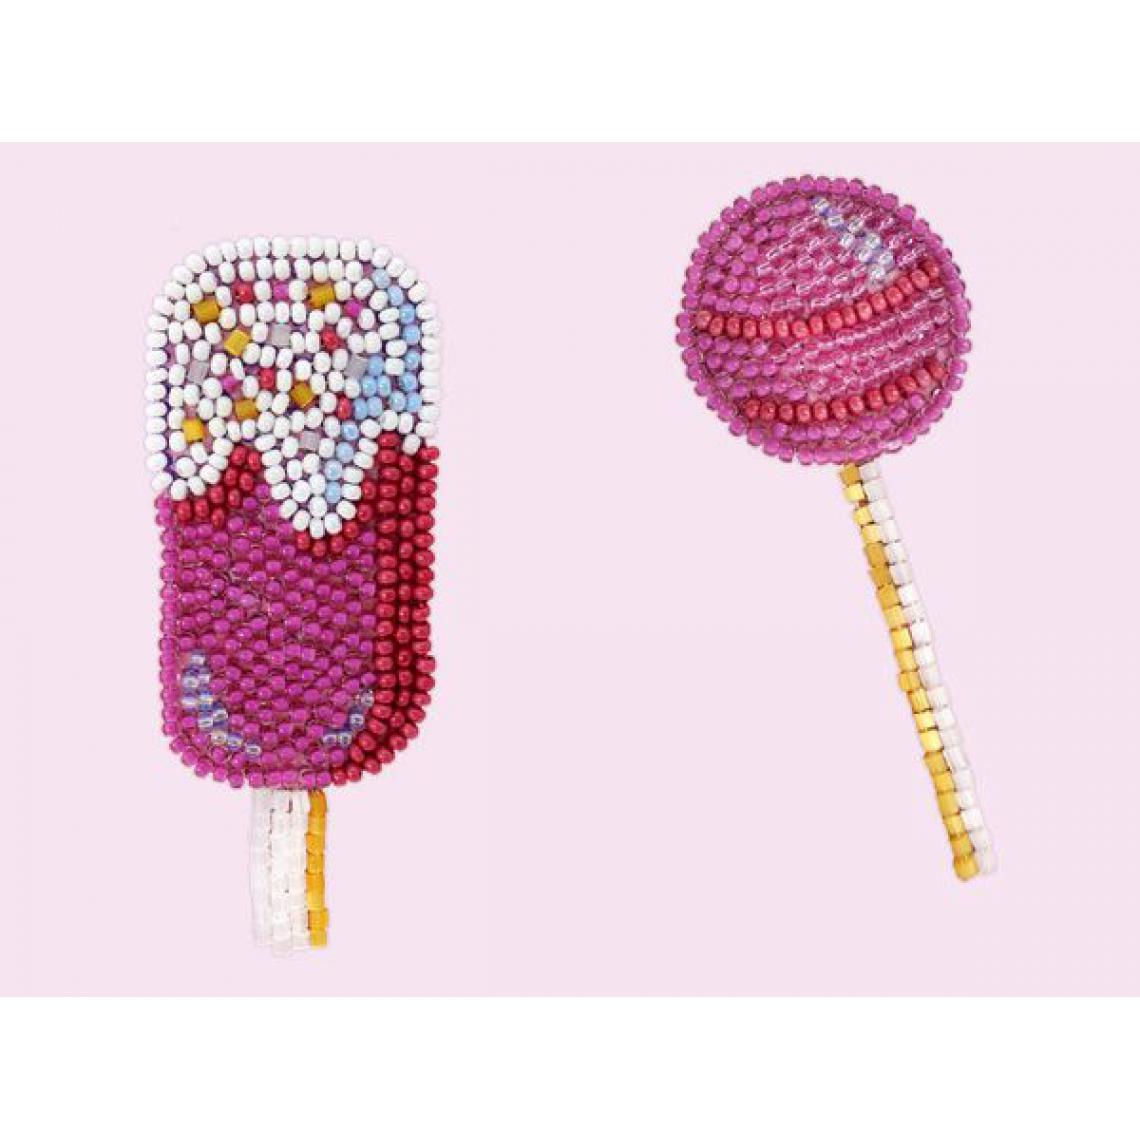 Miniart Crafts - Lollipop. Ice Cream, Perlenstickset - Miniart Crafts - Accessoires et pièces